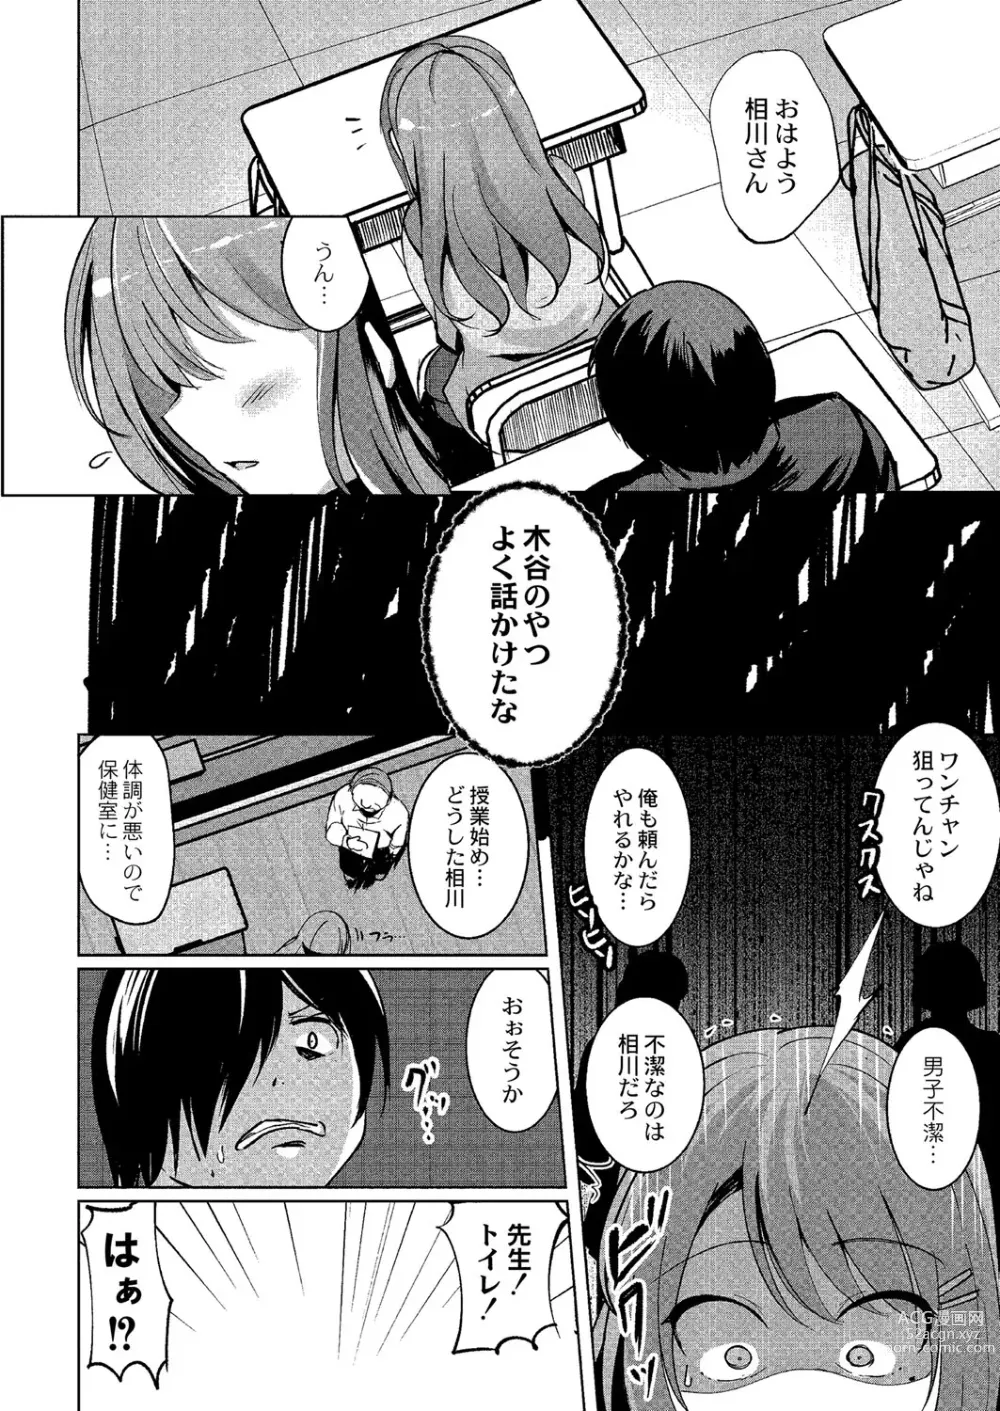 Page 5 of manga Wakarasare